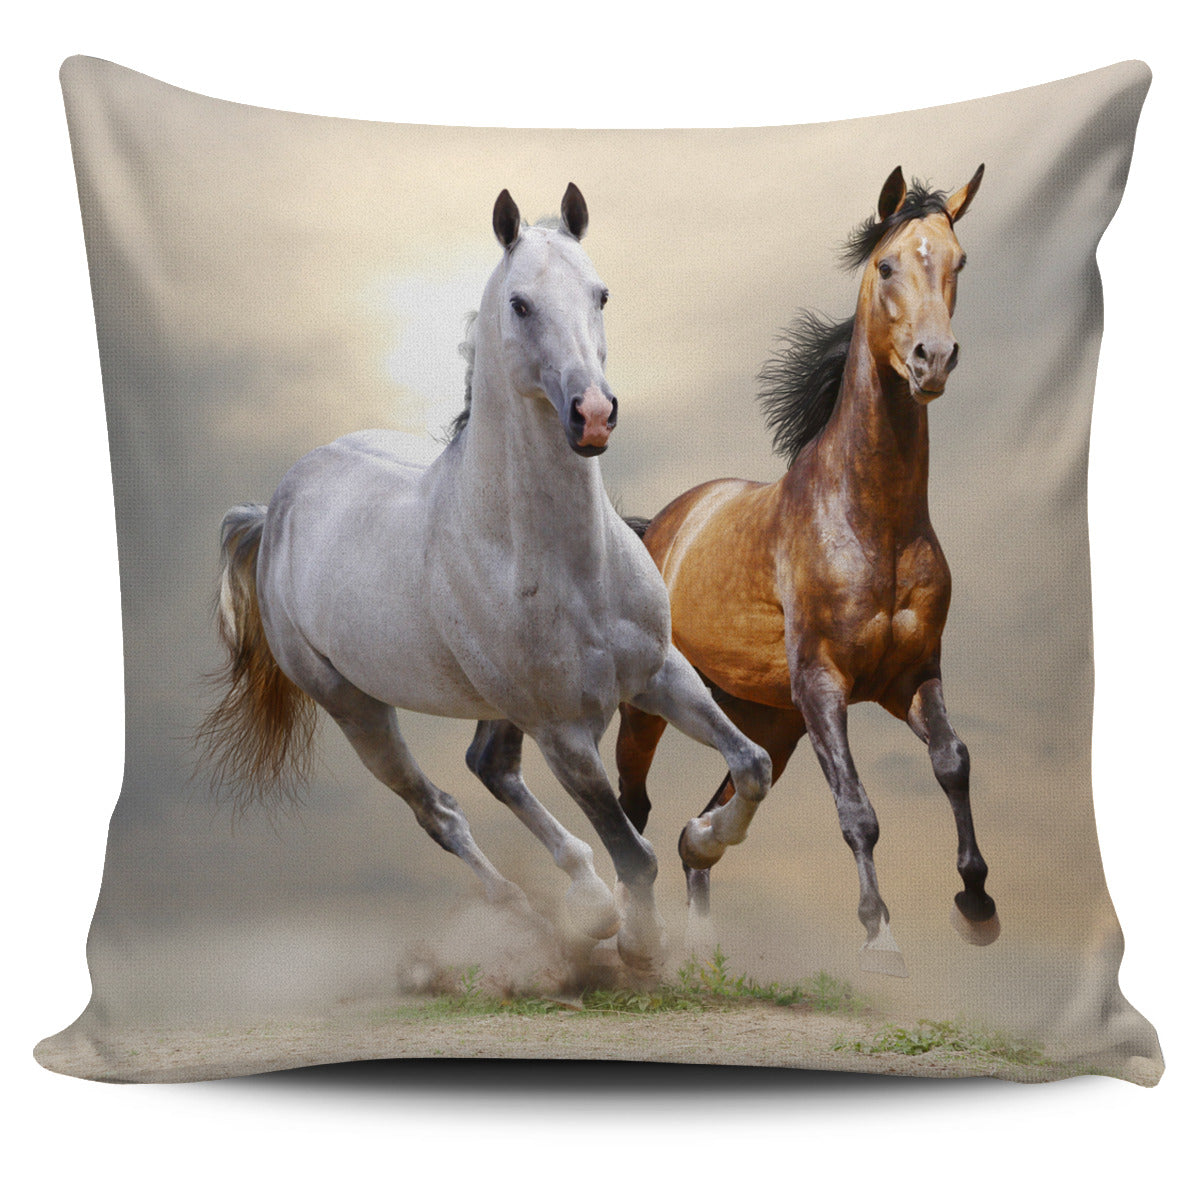 Horses Running Pillow Cover